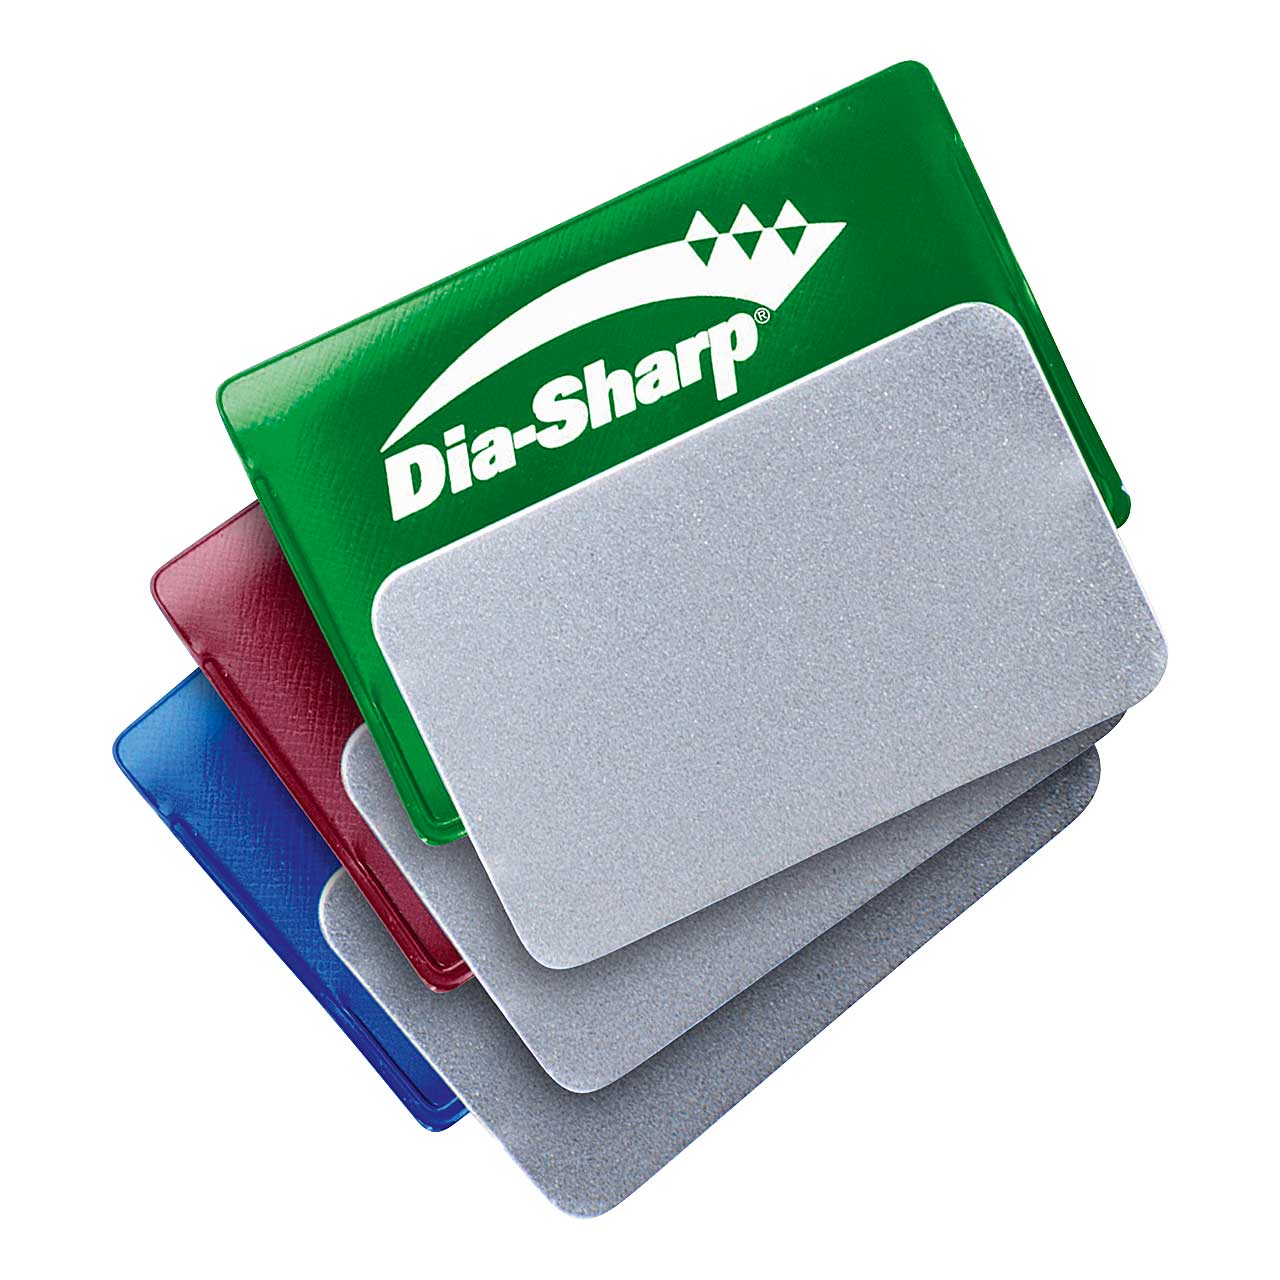 Dia-Sharp Kit COARSE/FINE/X-FINE